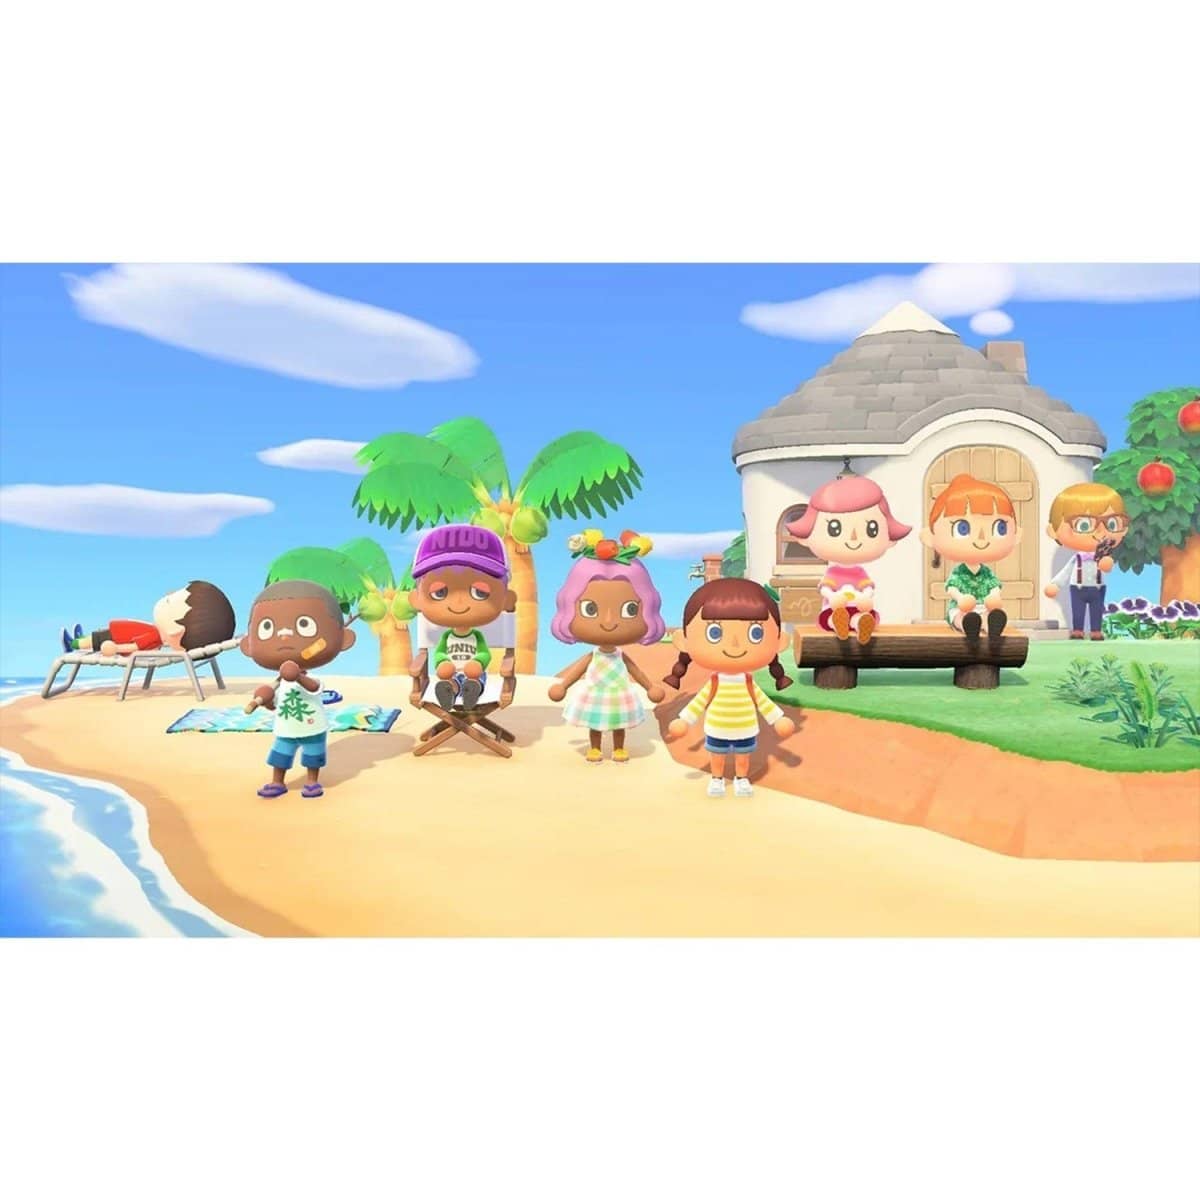 Nintendo Switch Animal Crossing: New Horizons - Toottoot SG